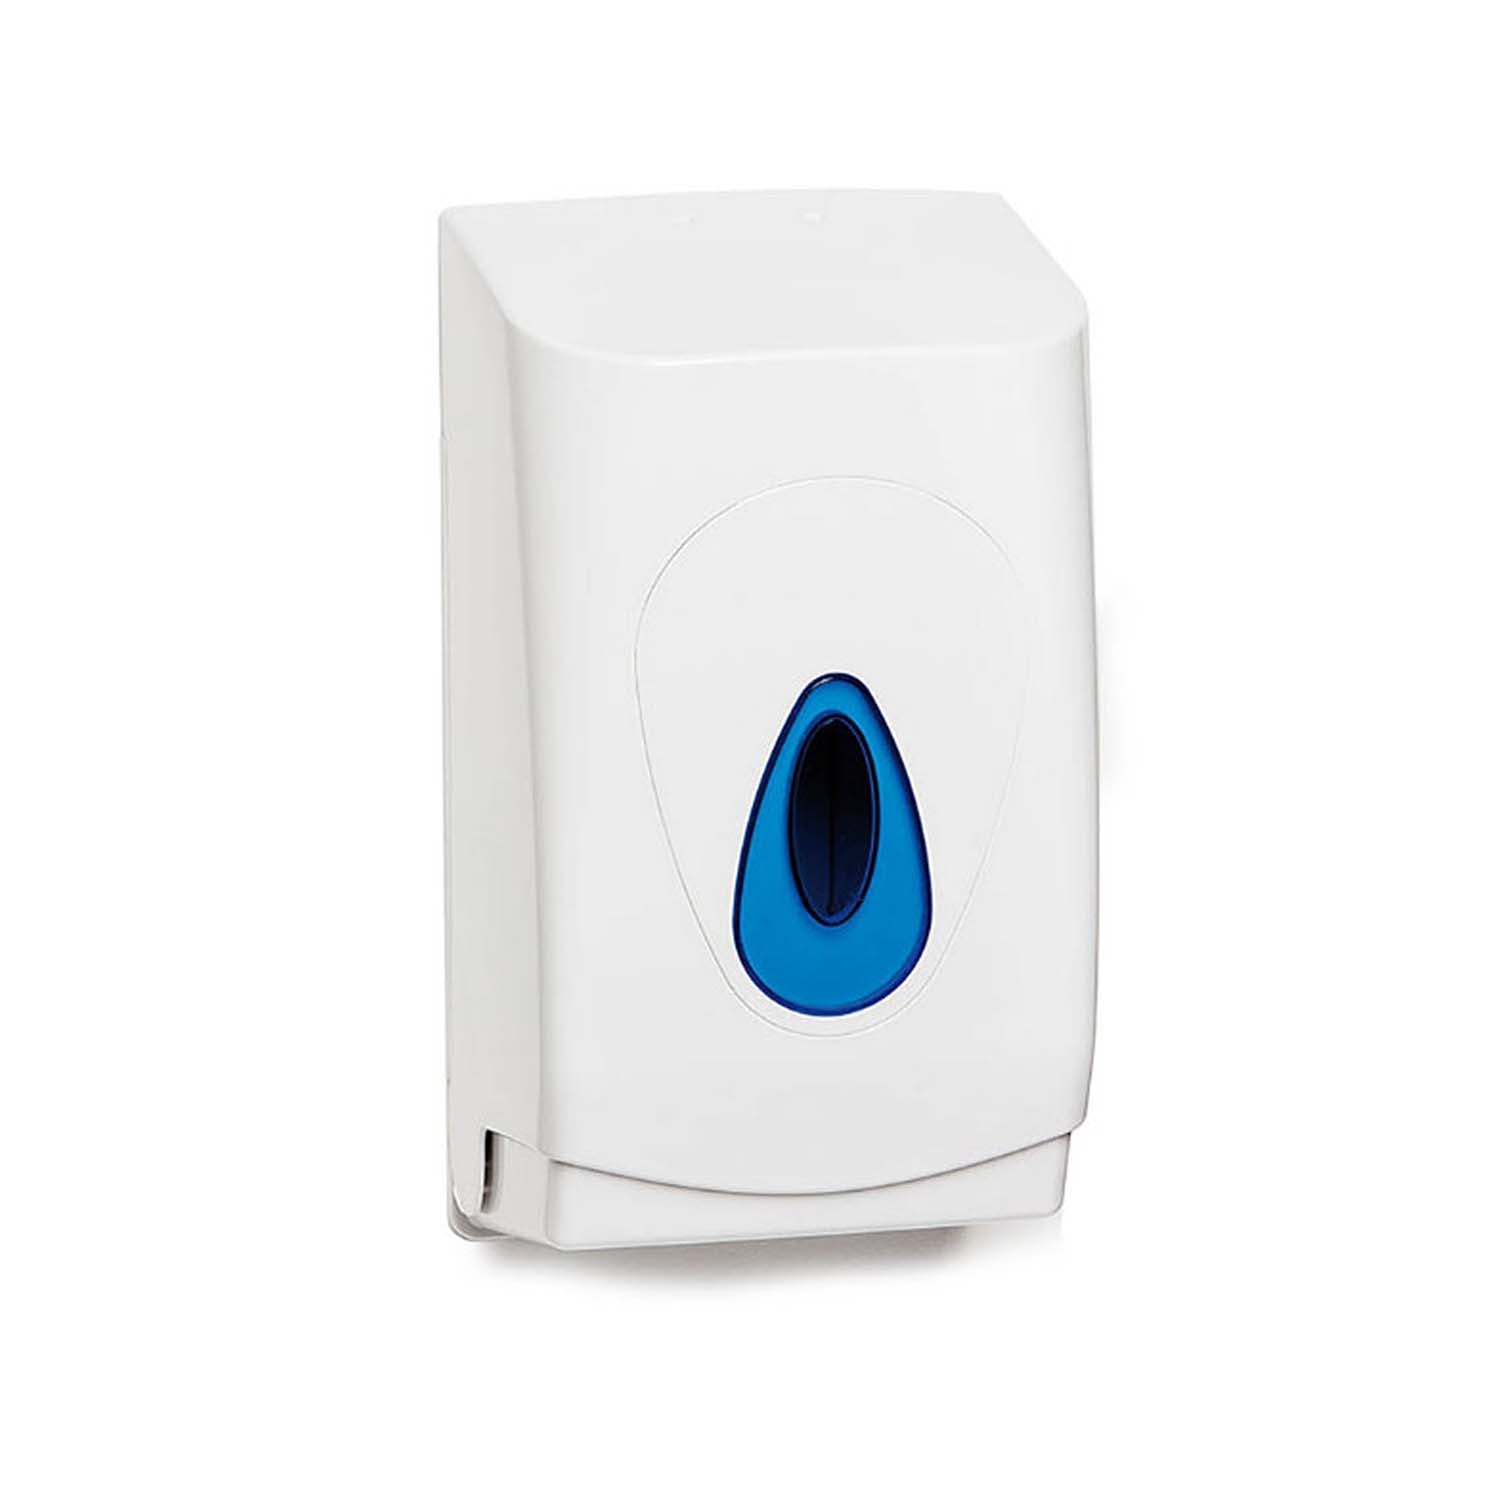 Modular Multiflat Toilet Paper Dispenser